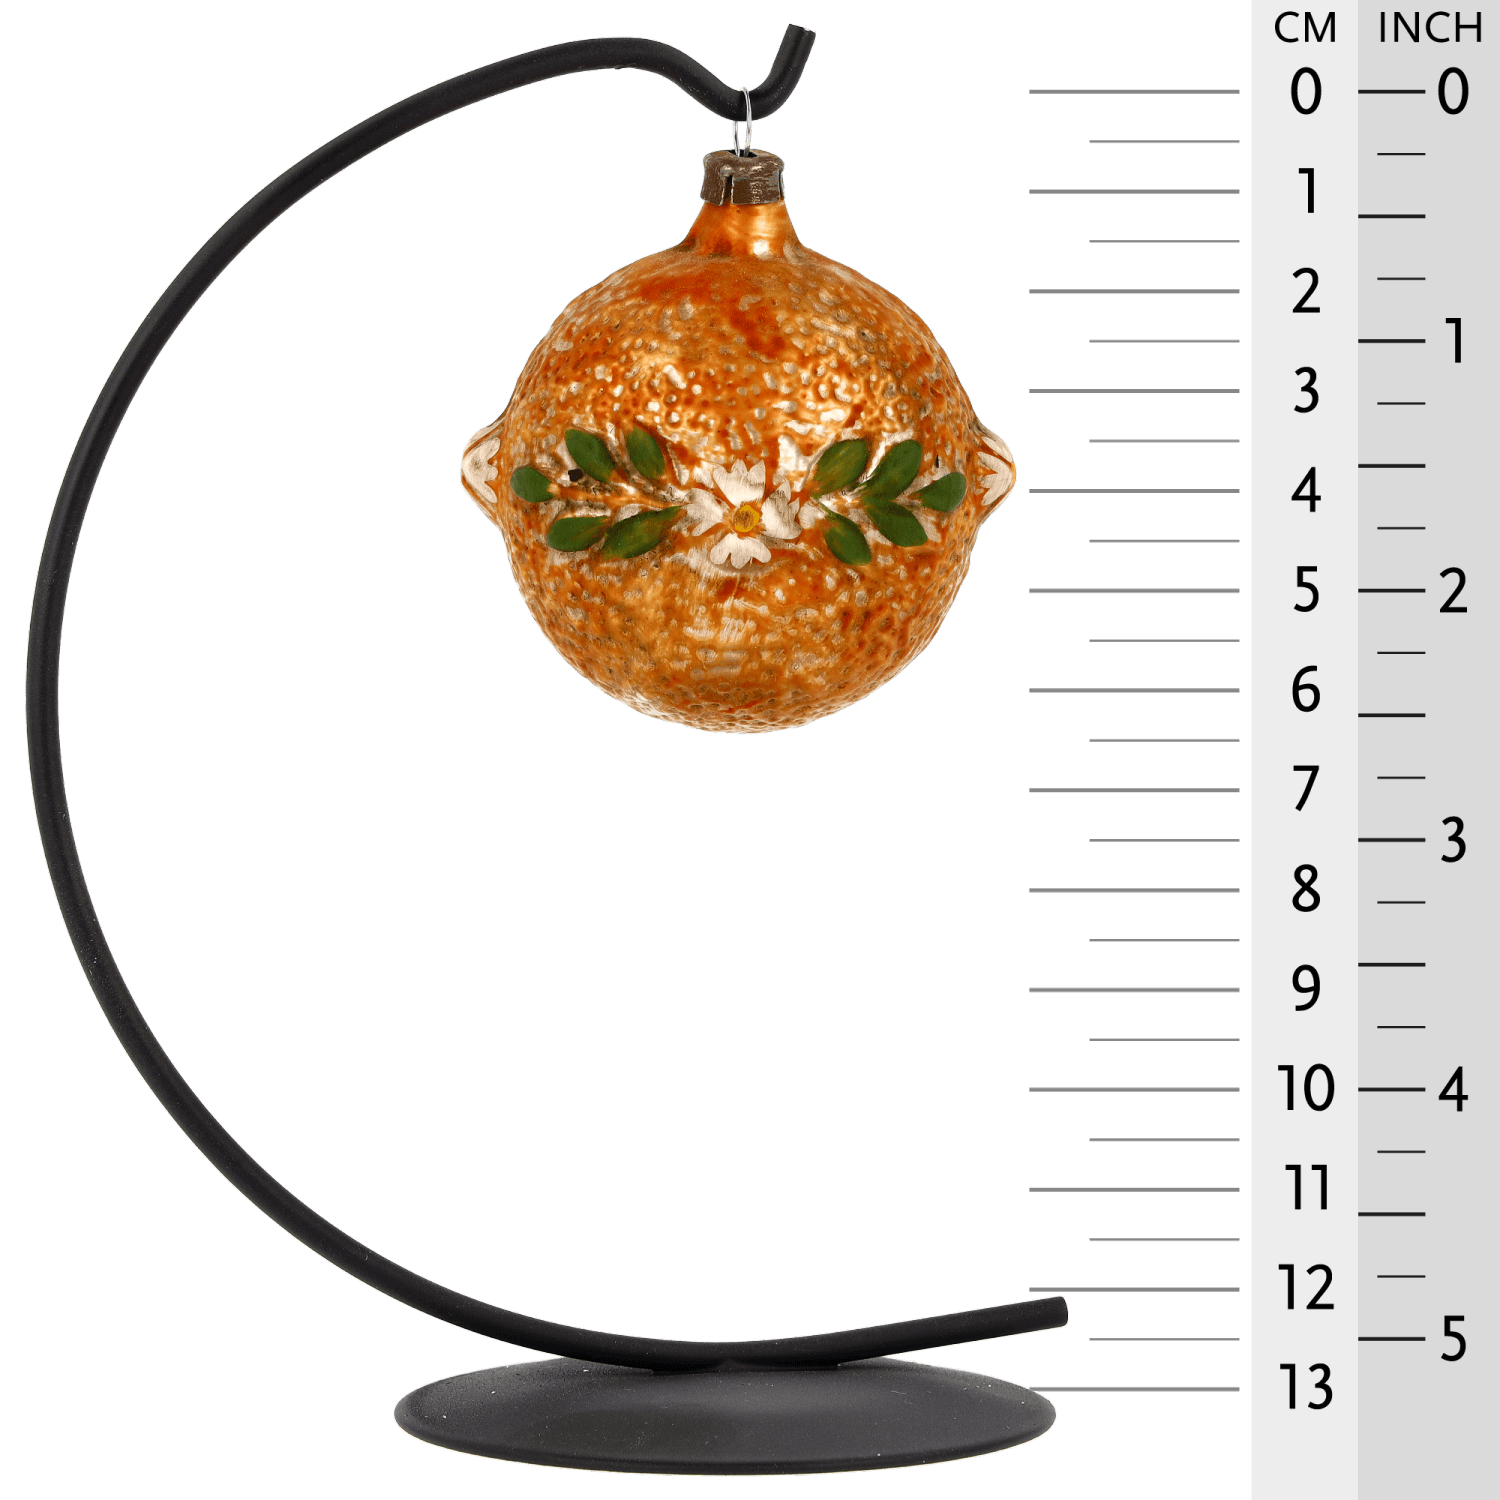 MAROLIN® - Glass ornament "Orange"